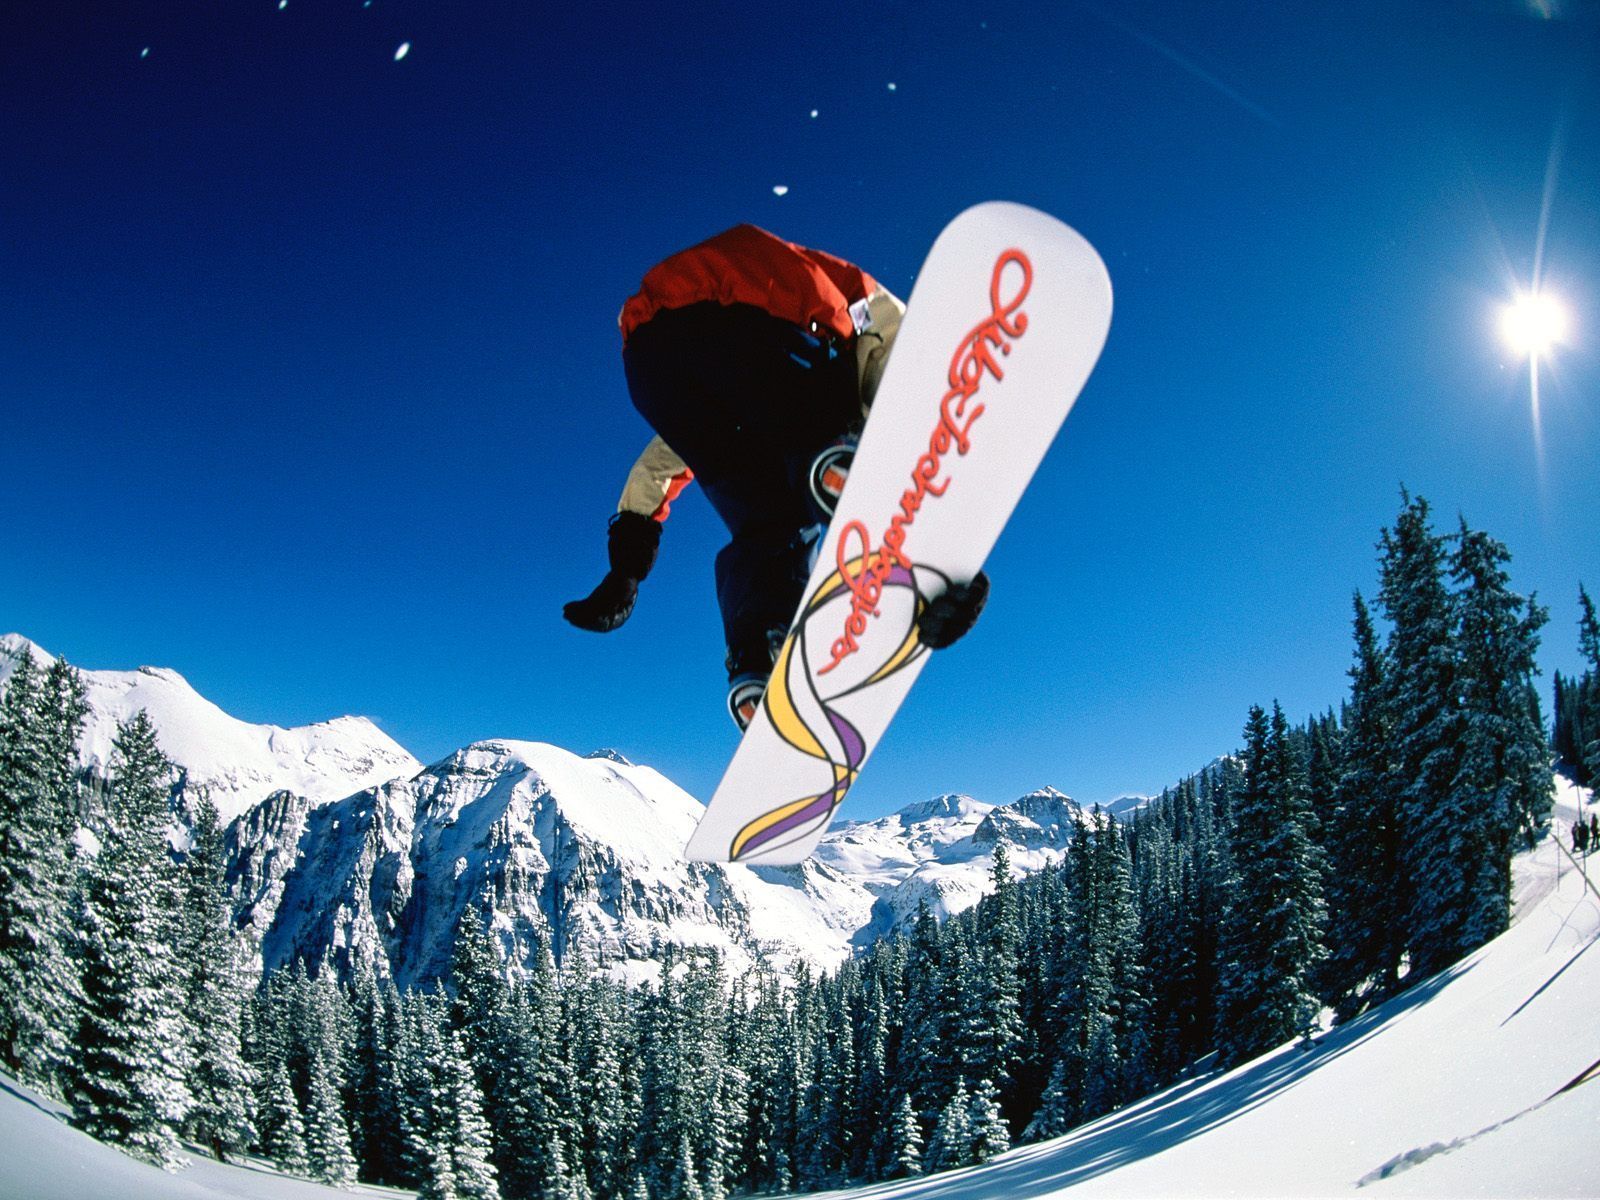 Extreme Snowboarding Wallpaper | 1280x1024 | ID:26255